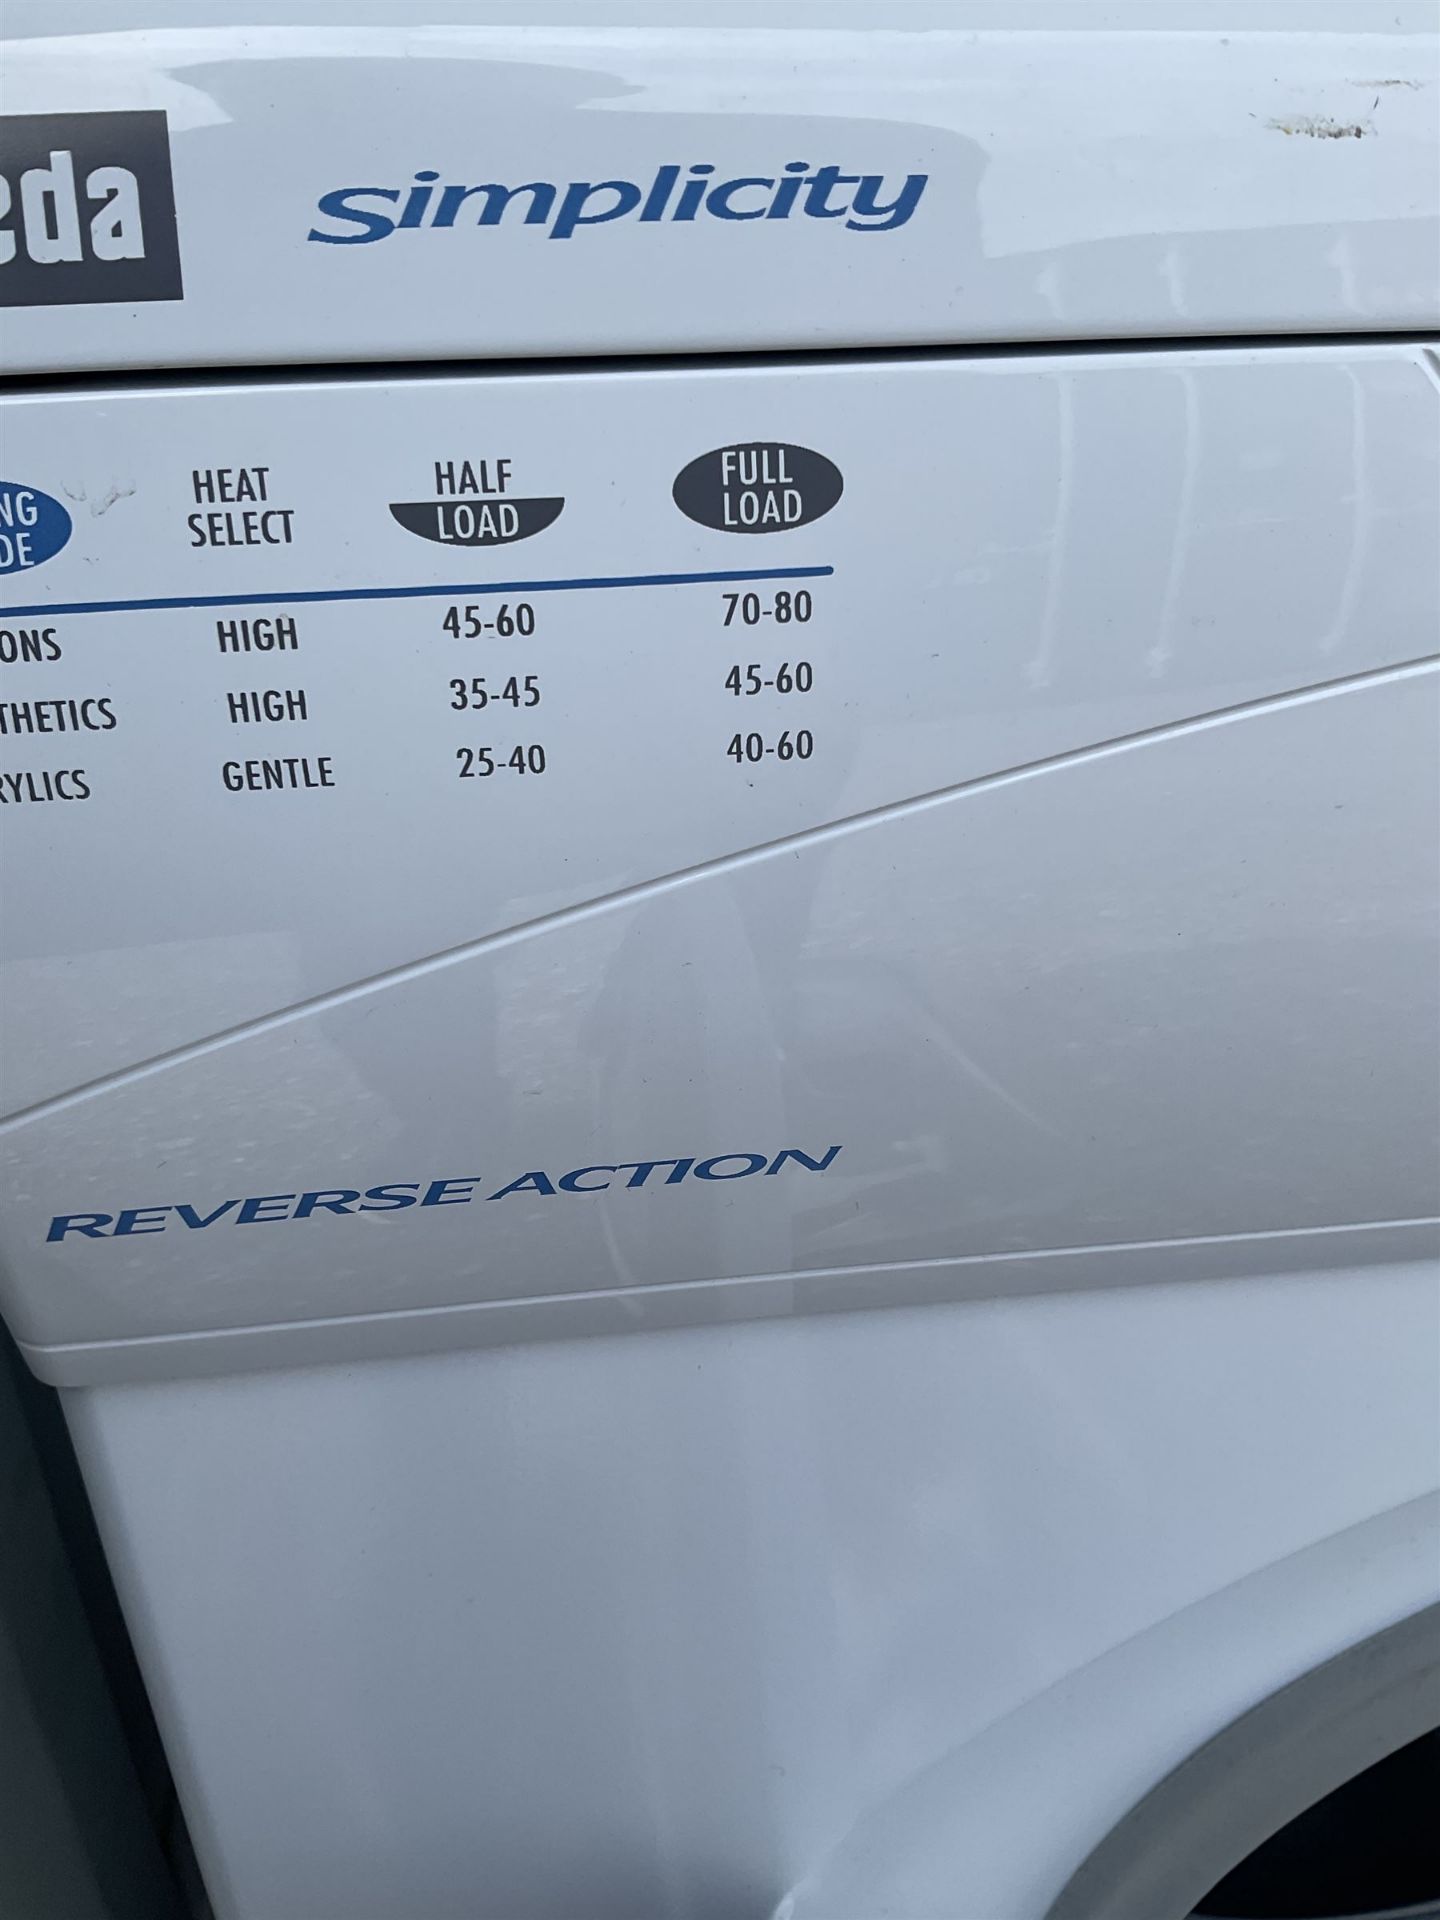 Creda 37761 vented tumble dryer - Image 3 of 3